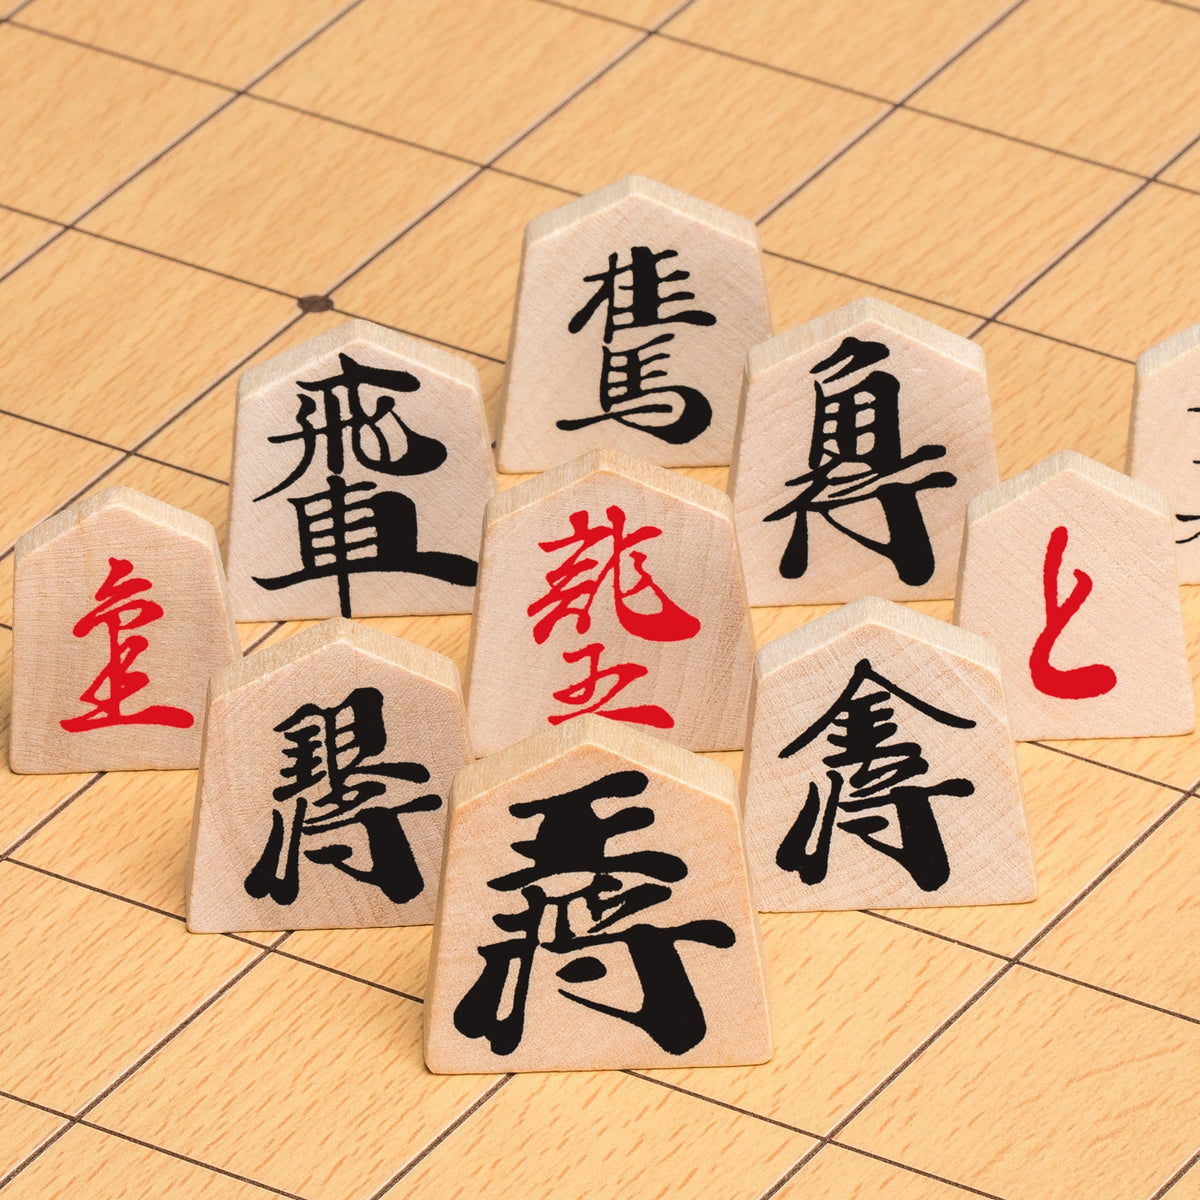  Yellow Mountain Imports Wooden Shogi Japanese Chess